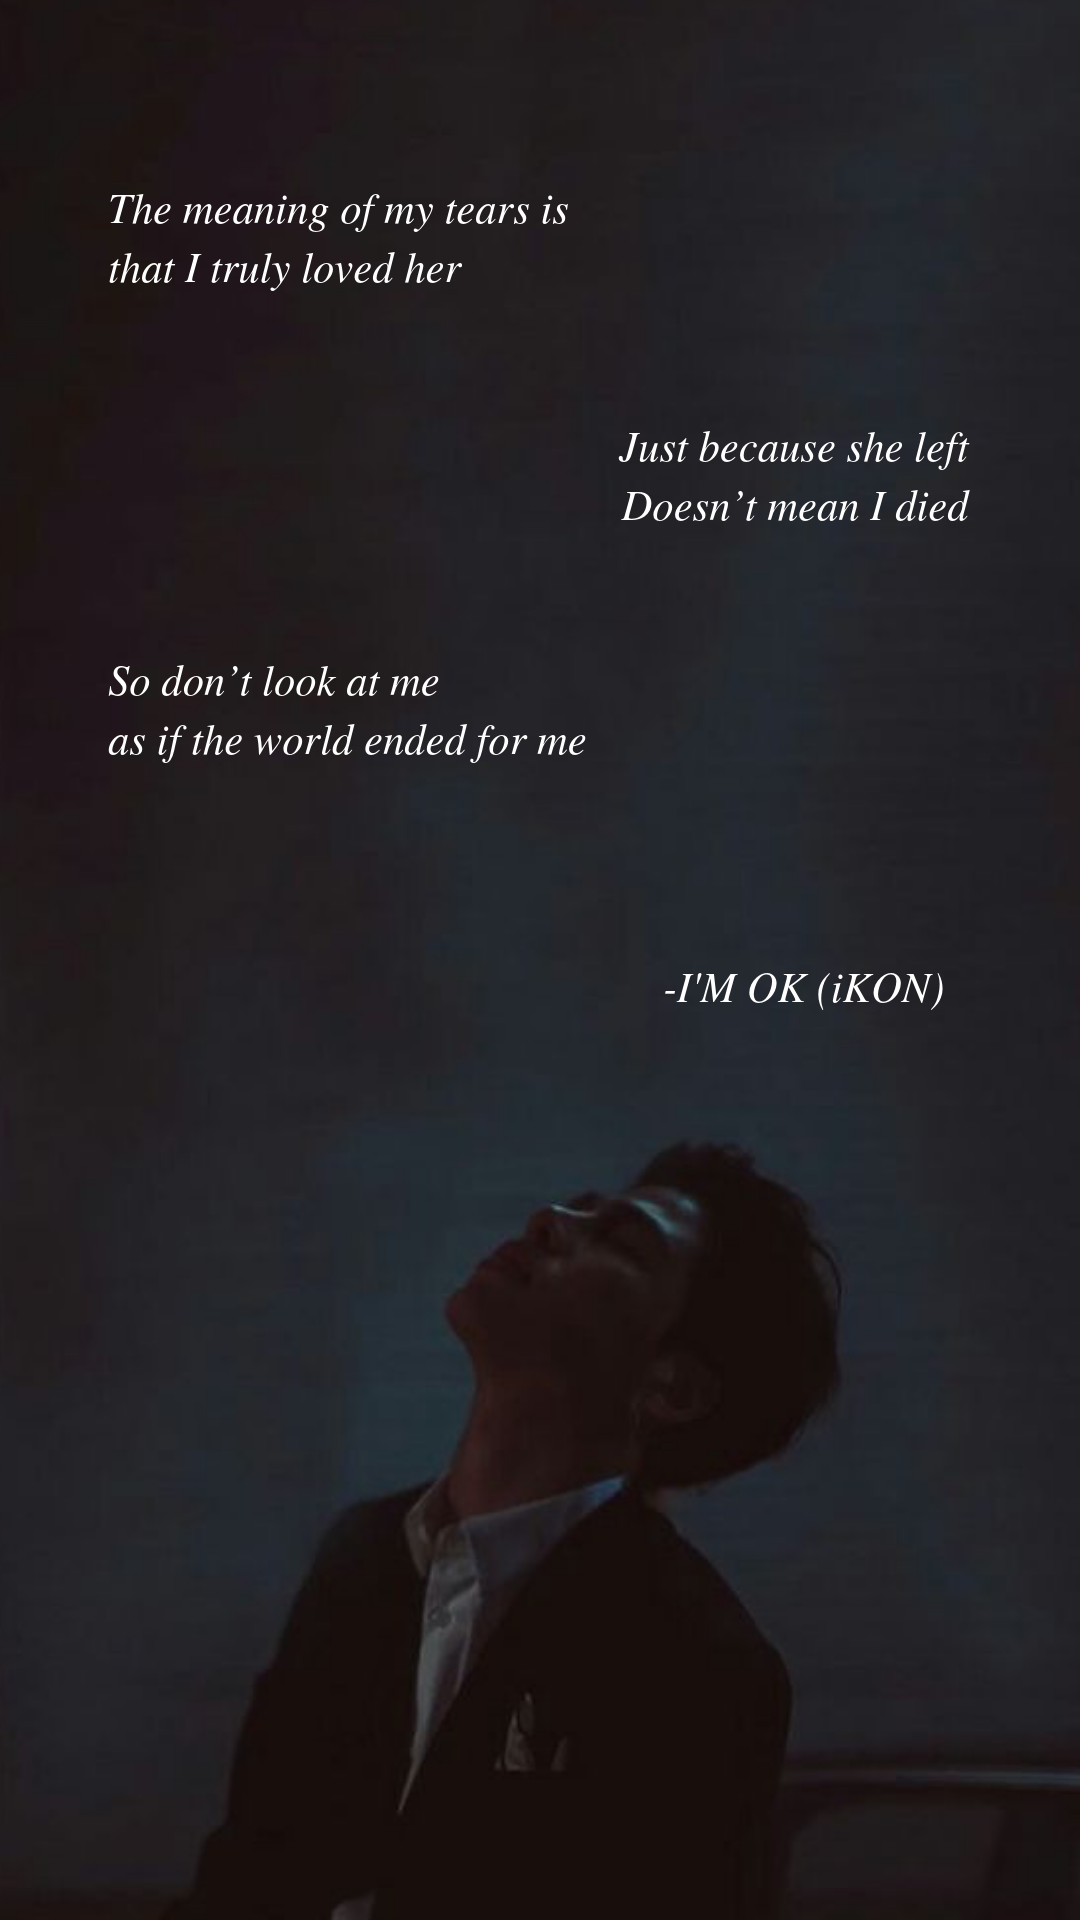 I'm OK by iKON. Lyrics wallpaper. Follow my IG